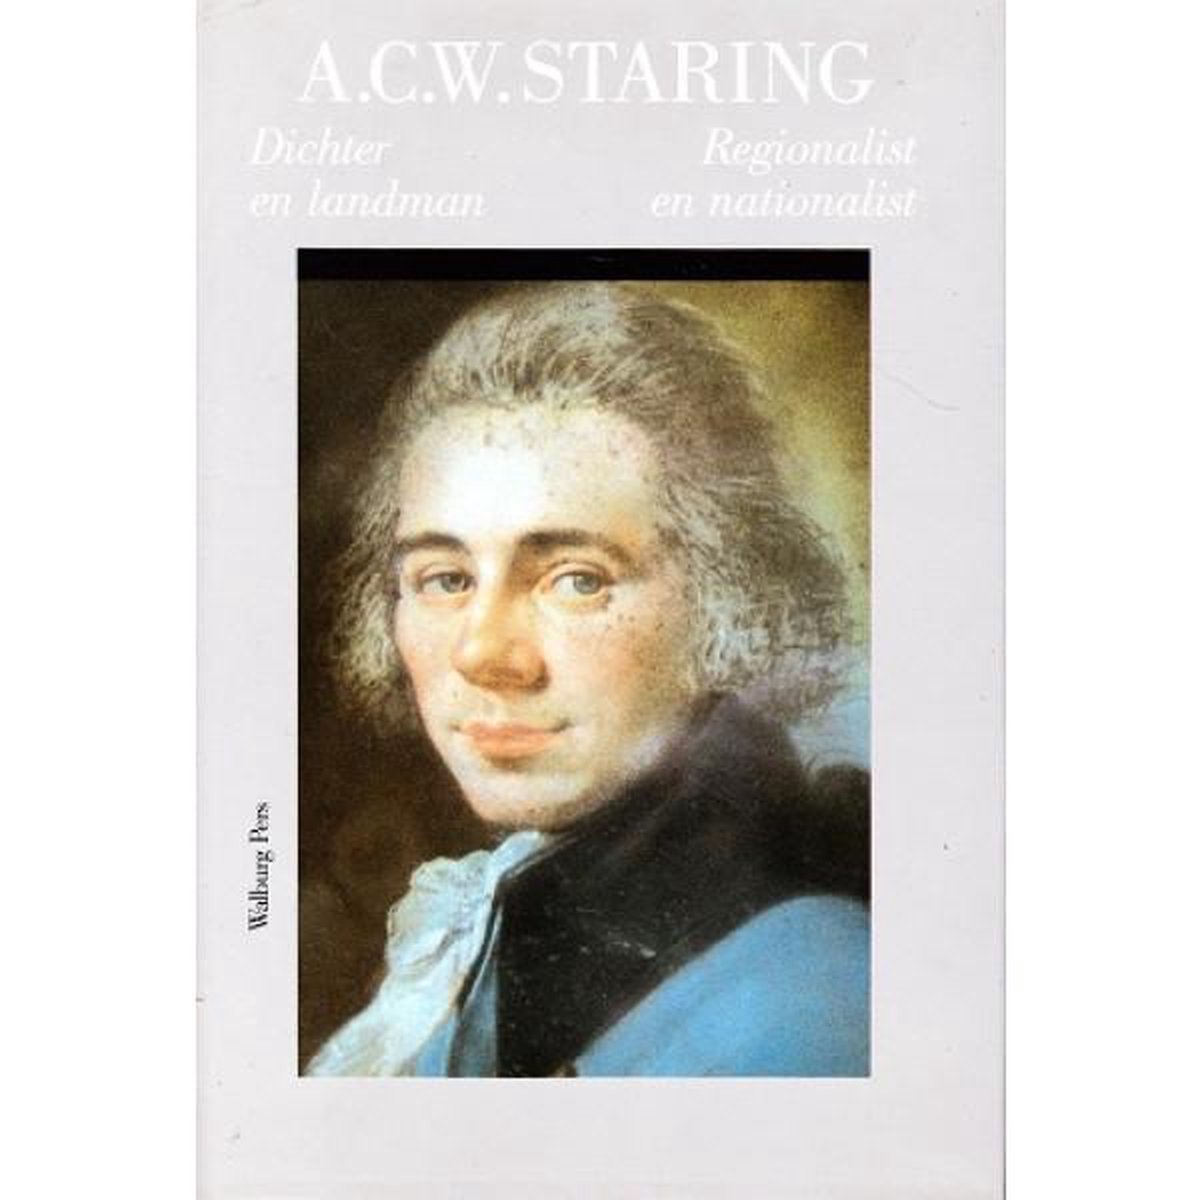 A.C.W. Staring